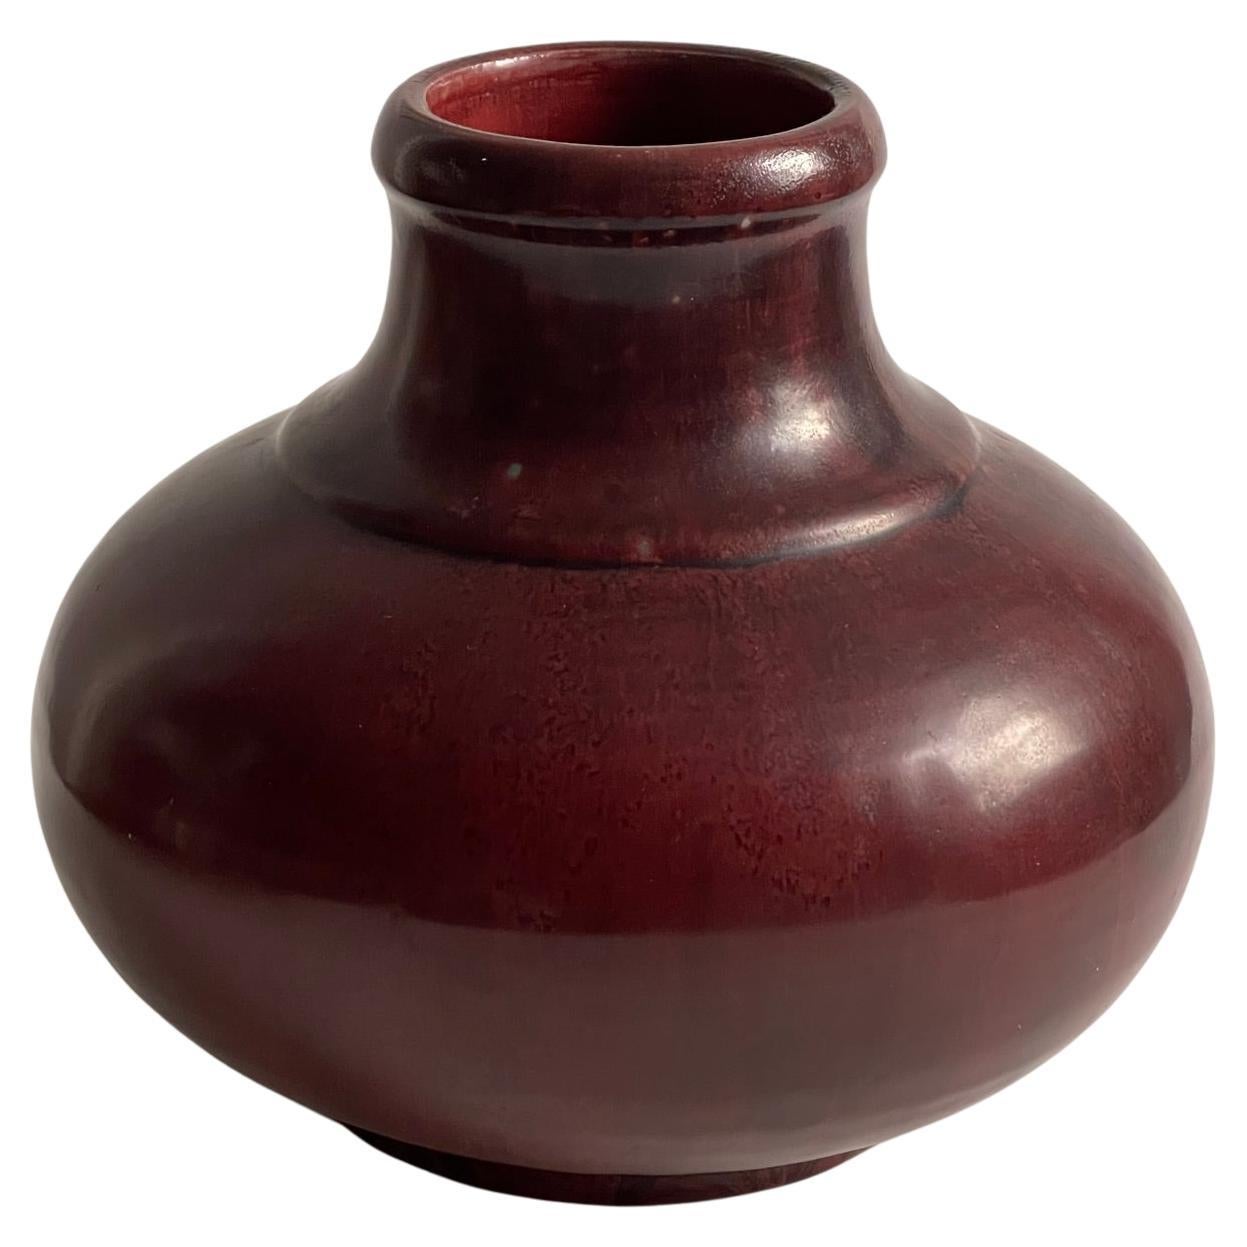 1935 Oxblood Red Vase by Ceramicist Carl Halier for Royal Copenhagen For Sale